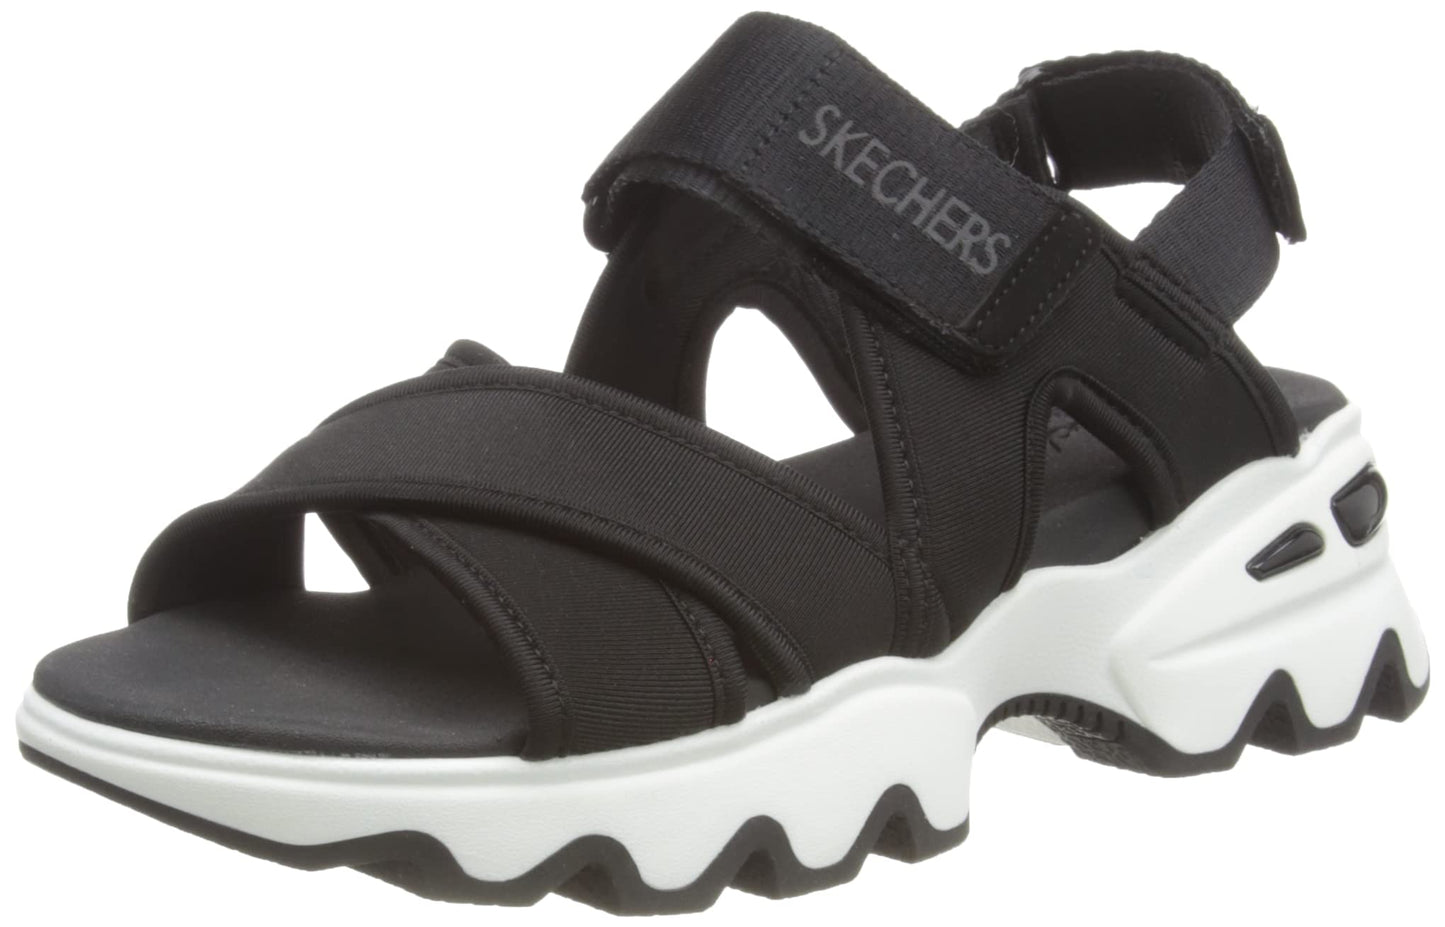 Skechers-BIG LUG-Women's Fashion Sandals-119710-BLK-BLACK UK2